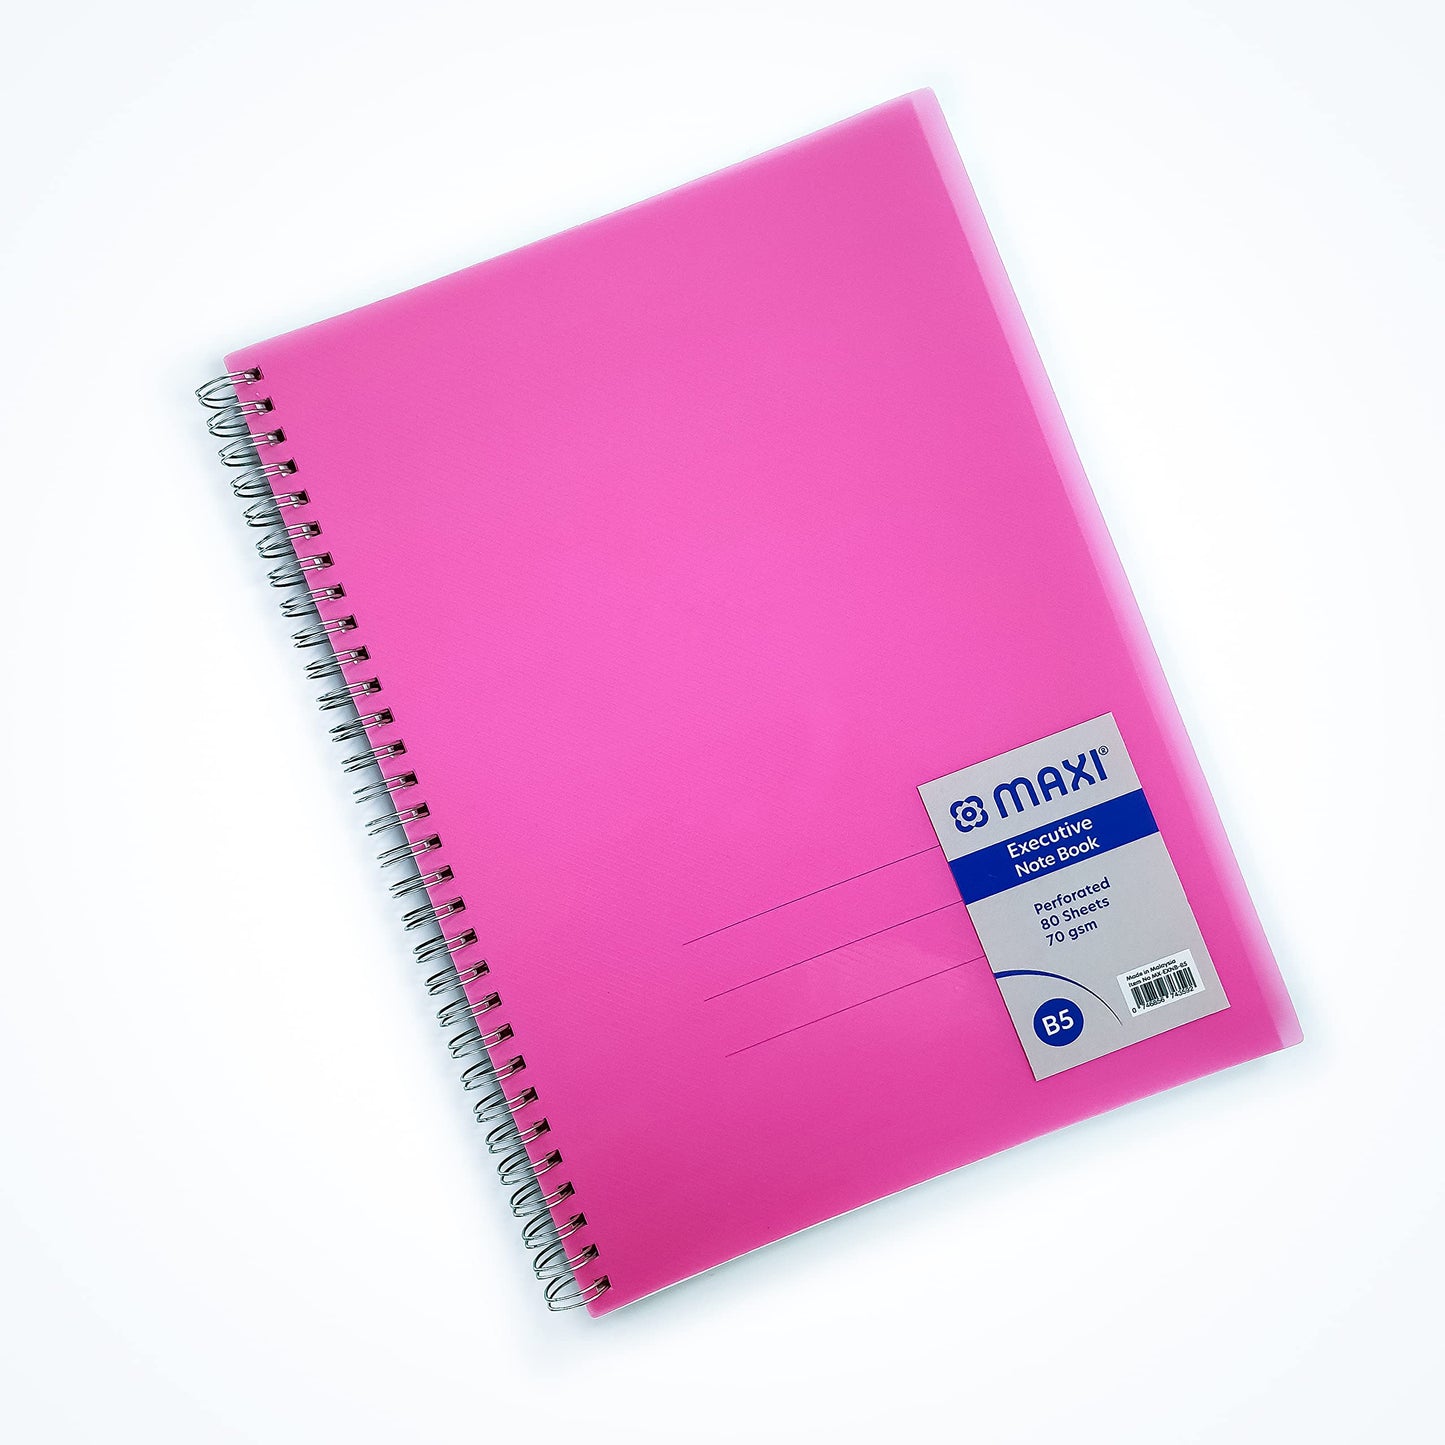 Maxi Wire Polypropylene Executive Notebook B5 80 Sheets, Assorted